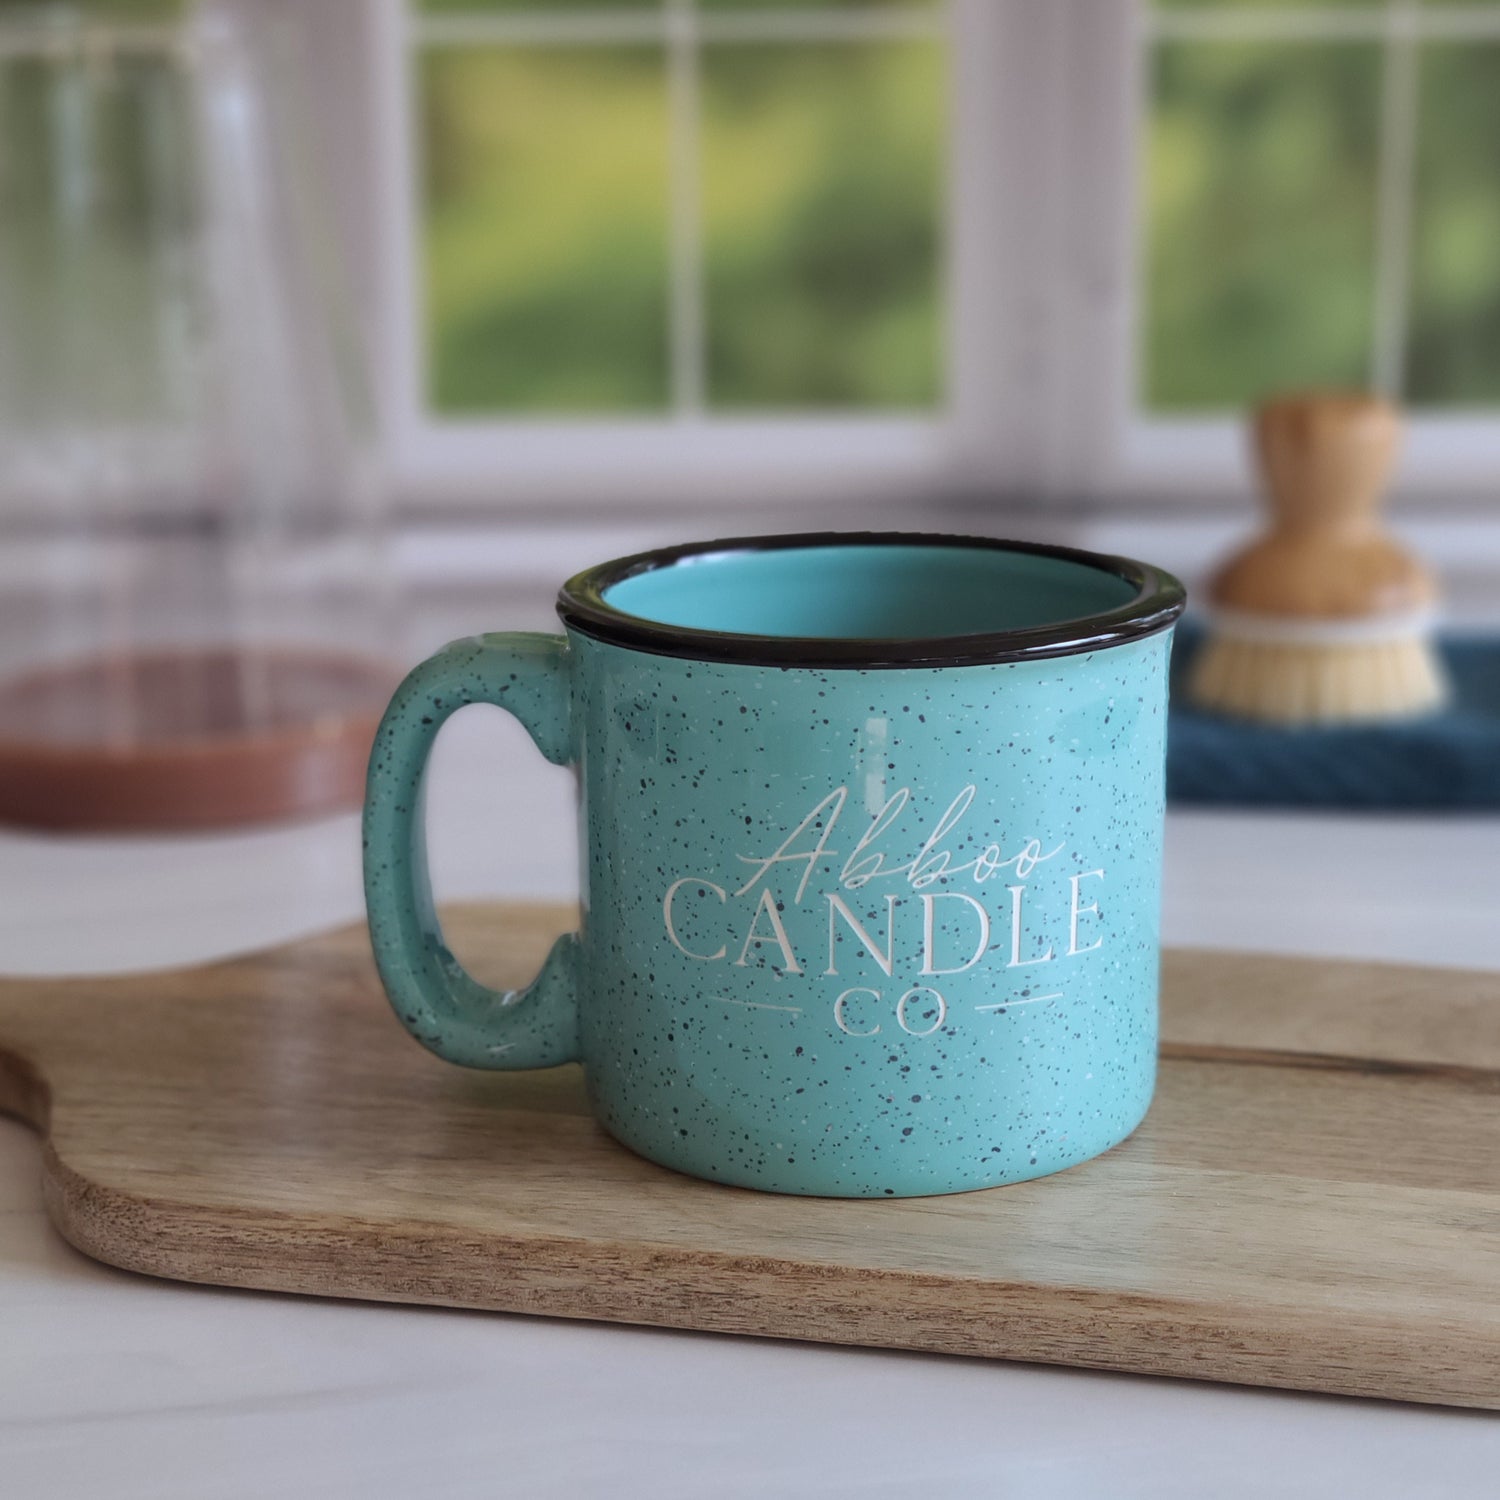 Abboo Candle Co logo teal colored campfire ceramic mug